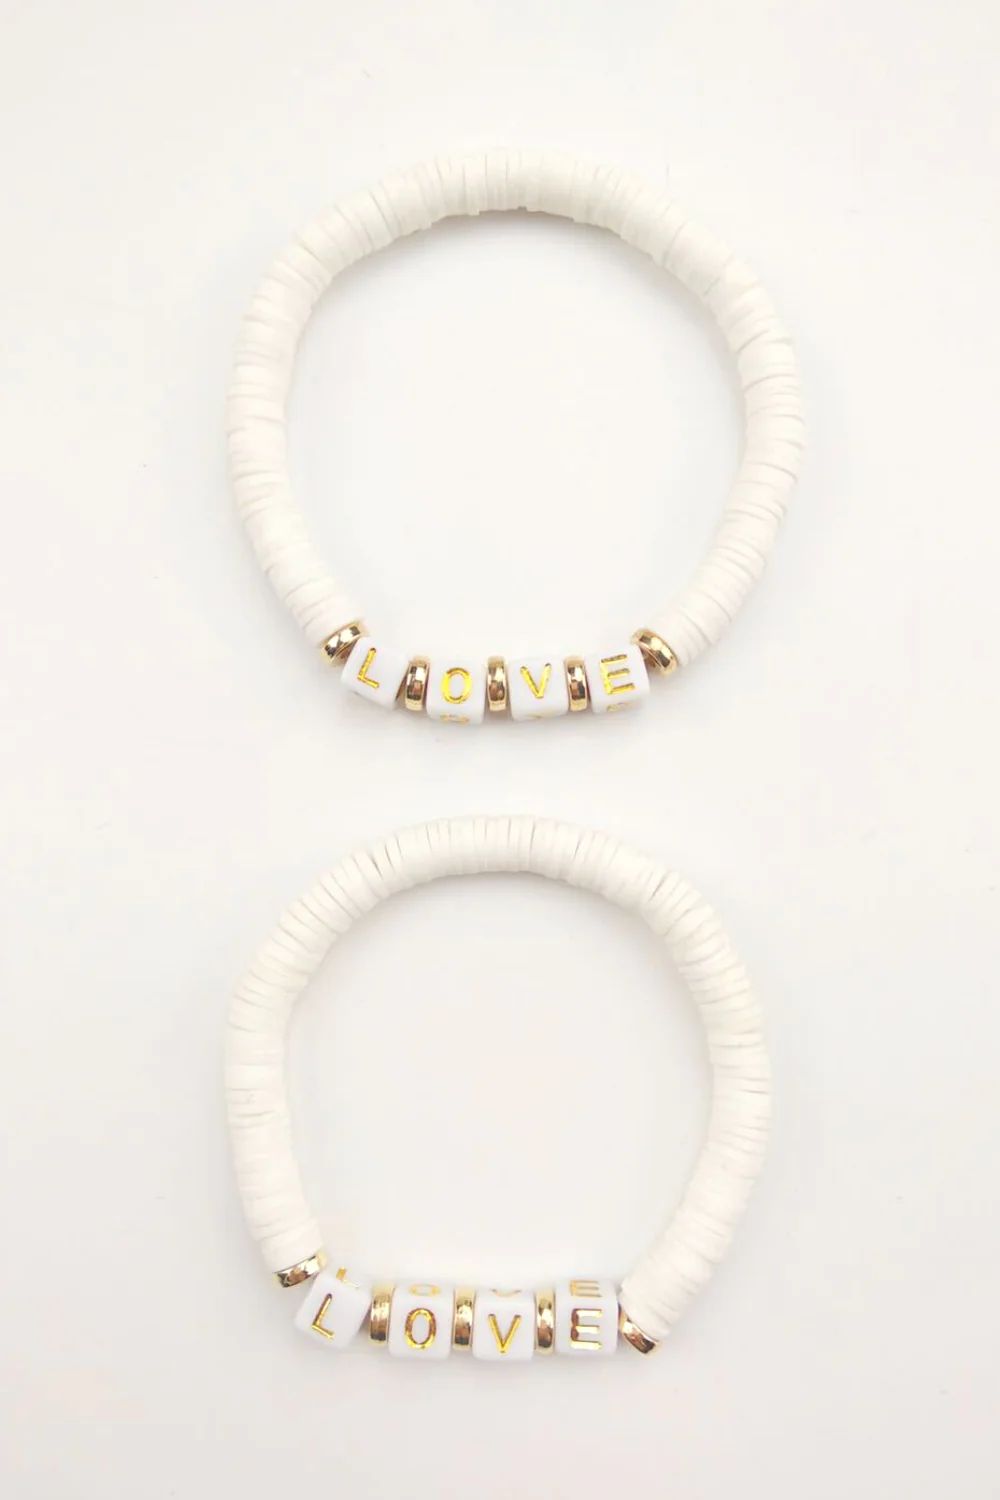 Krista + Kolly Horton: Beachy Keen Bracelet | The Styled Collection